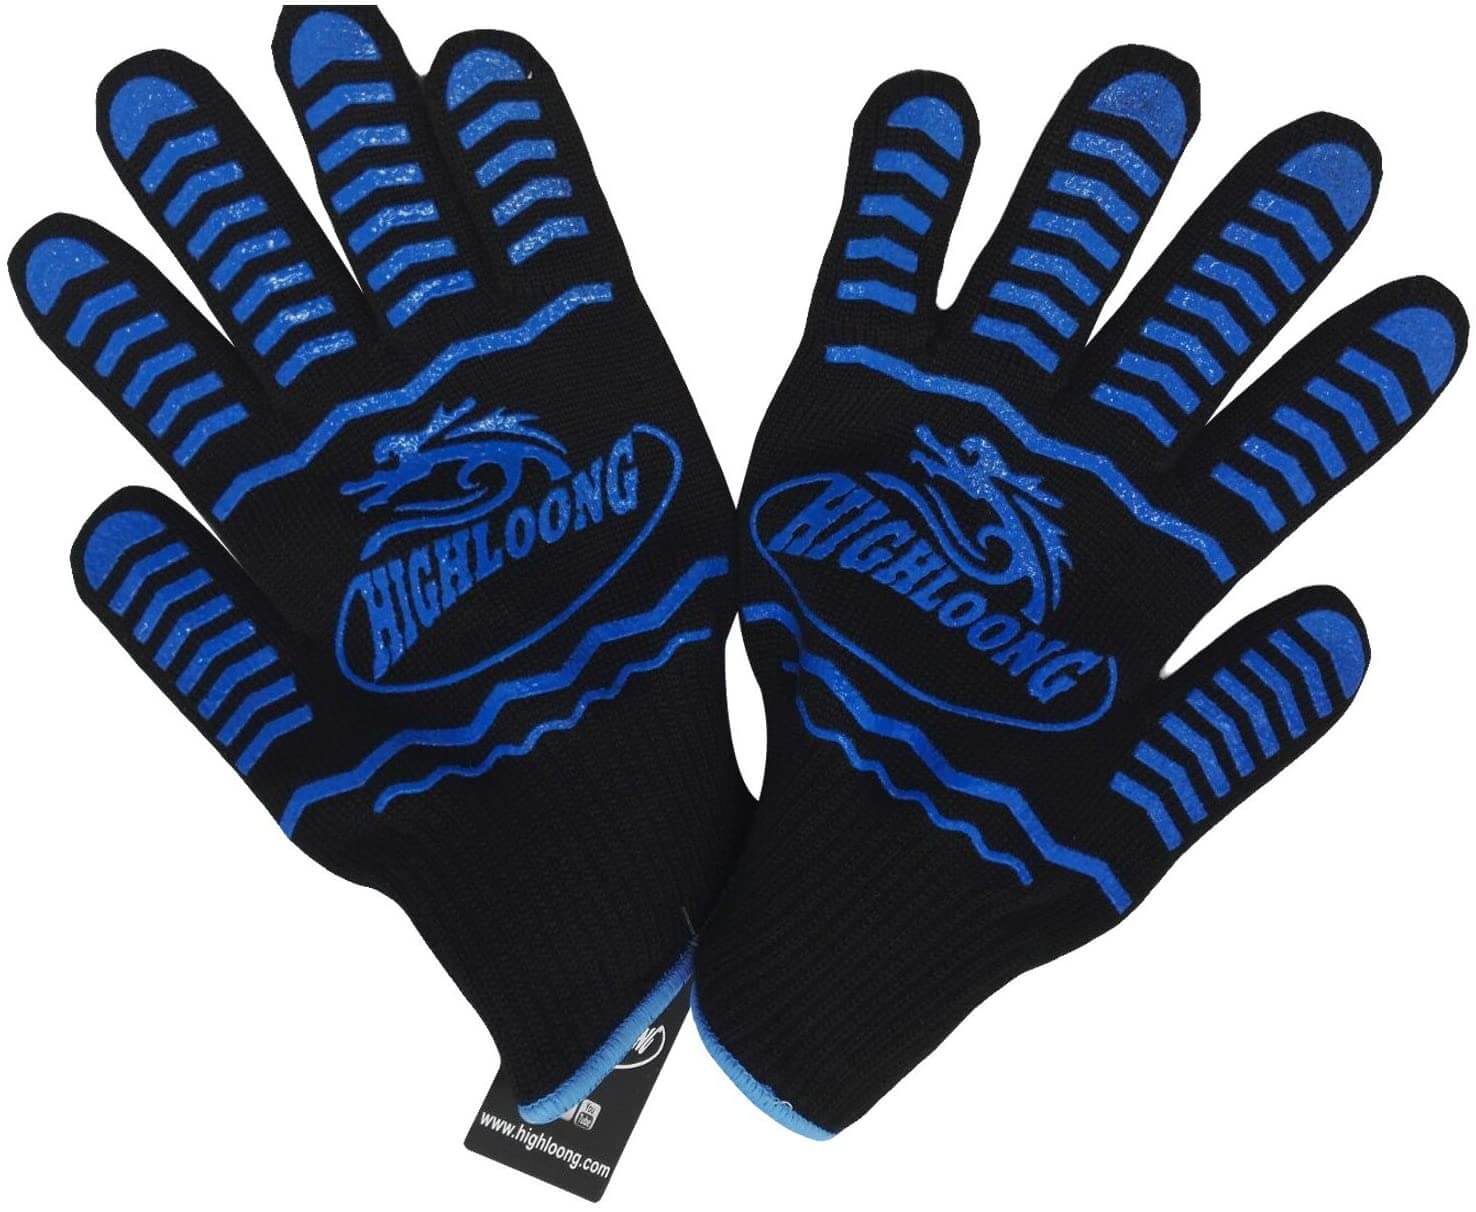 Highloong BBQ Gloves